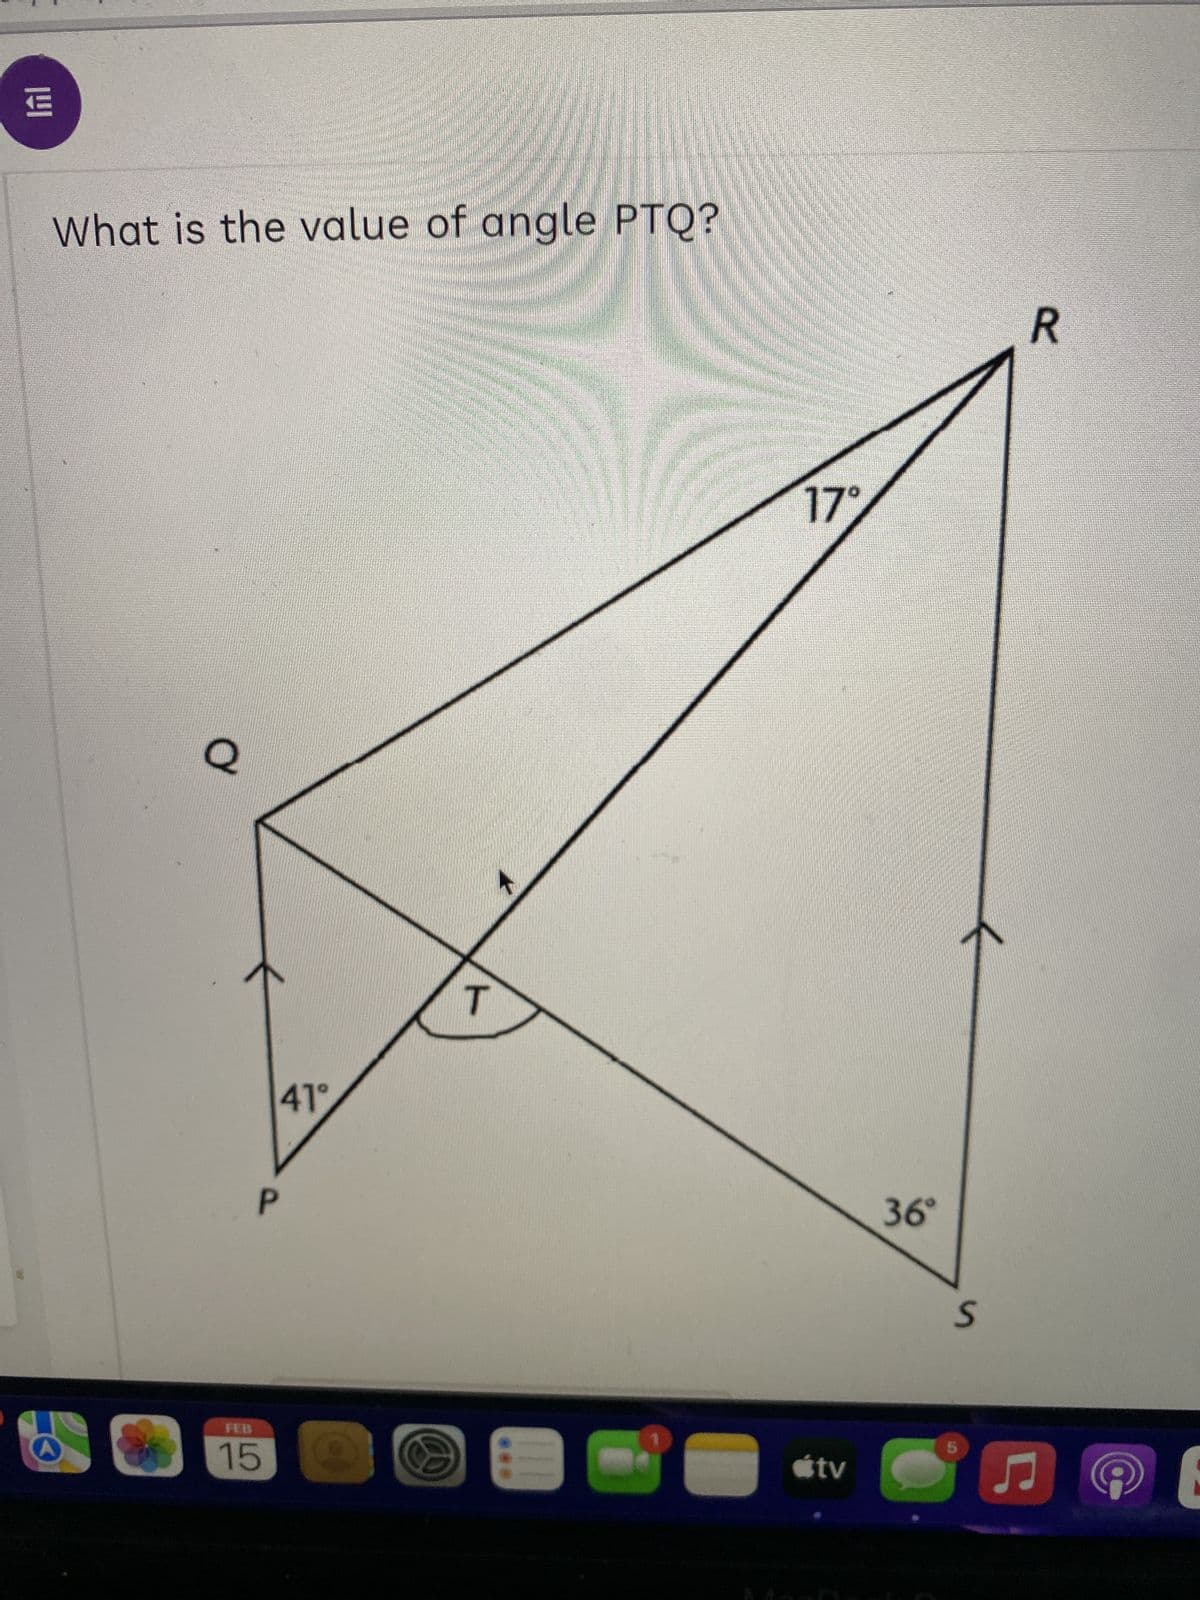 E
What is the value of angle PTQ?
Ơ
P
FEB
15
41°
T
Y
17%
★tv
36°
S
R
♫